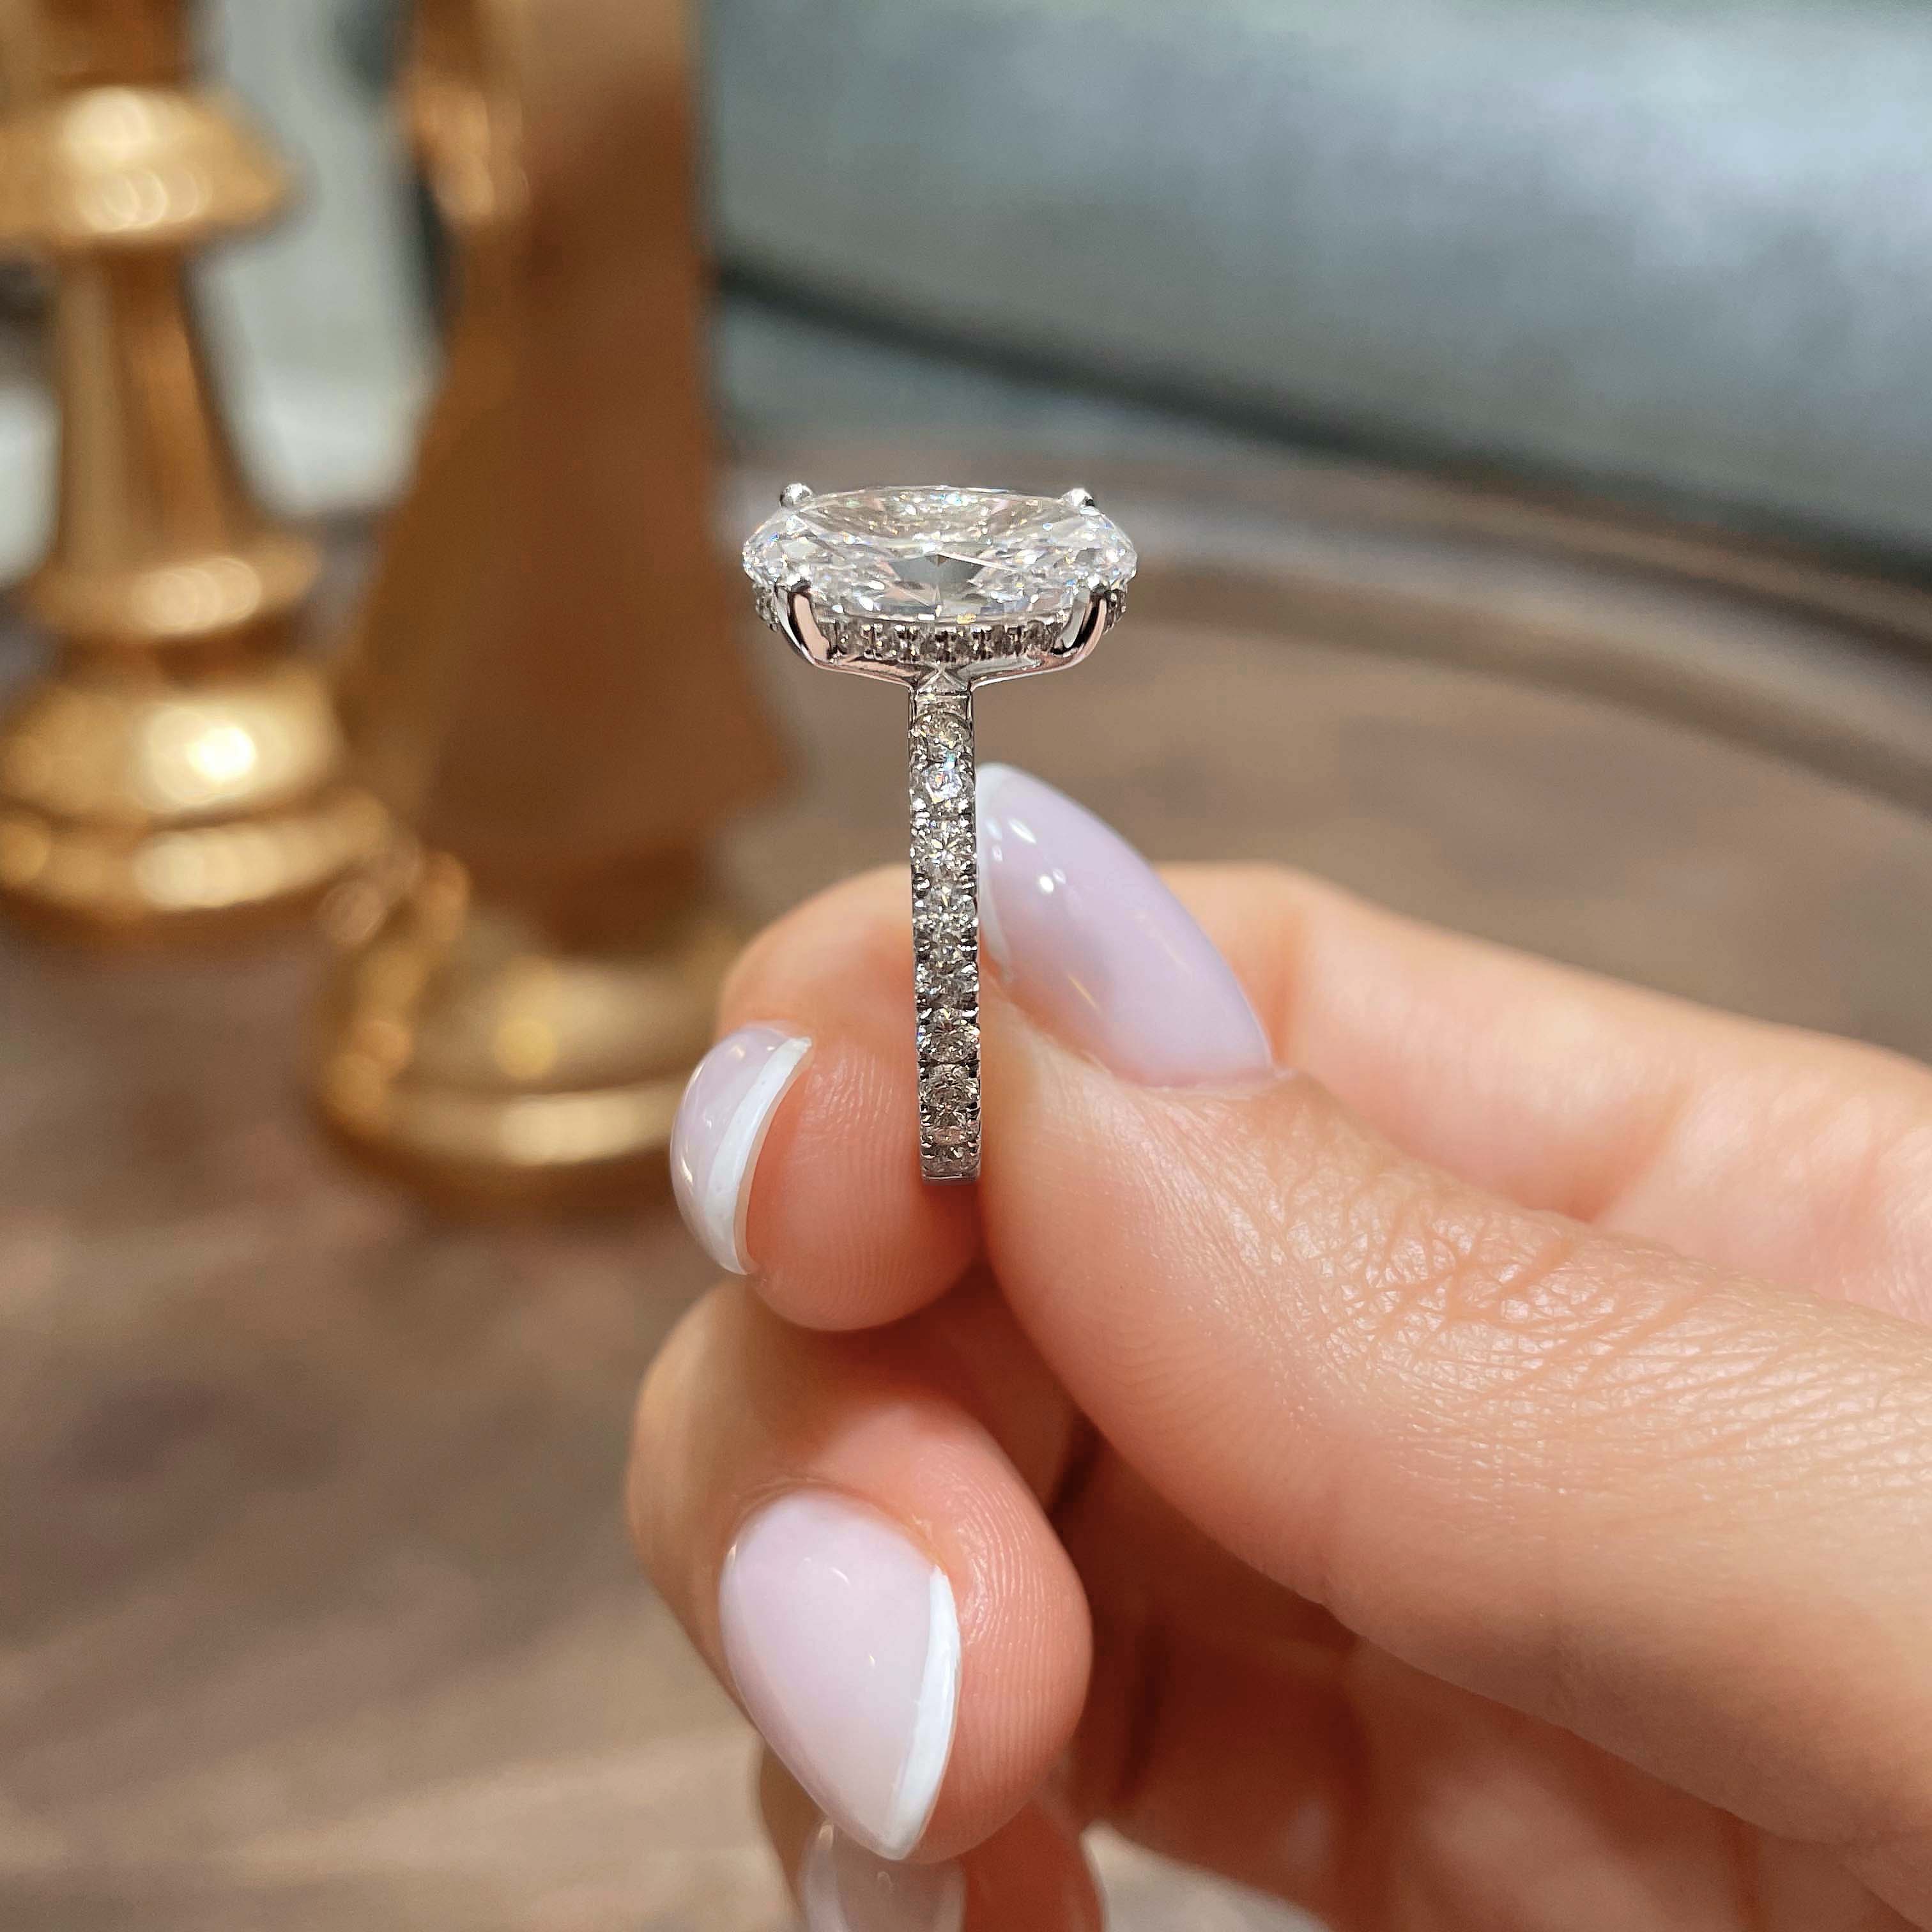 Lucy Diamond Engagement Ring   (3.5 Carat) -Platinum